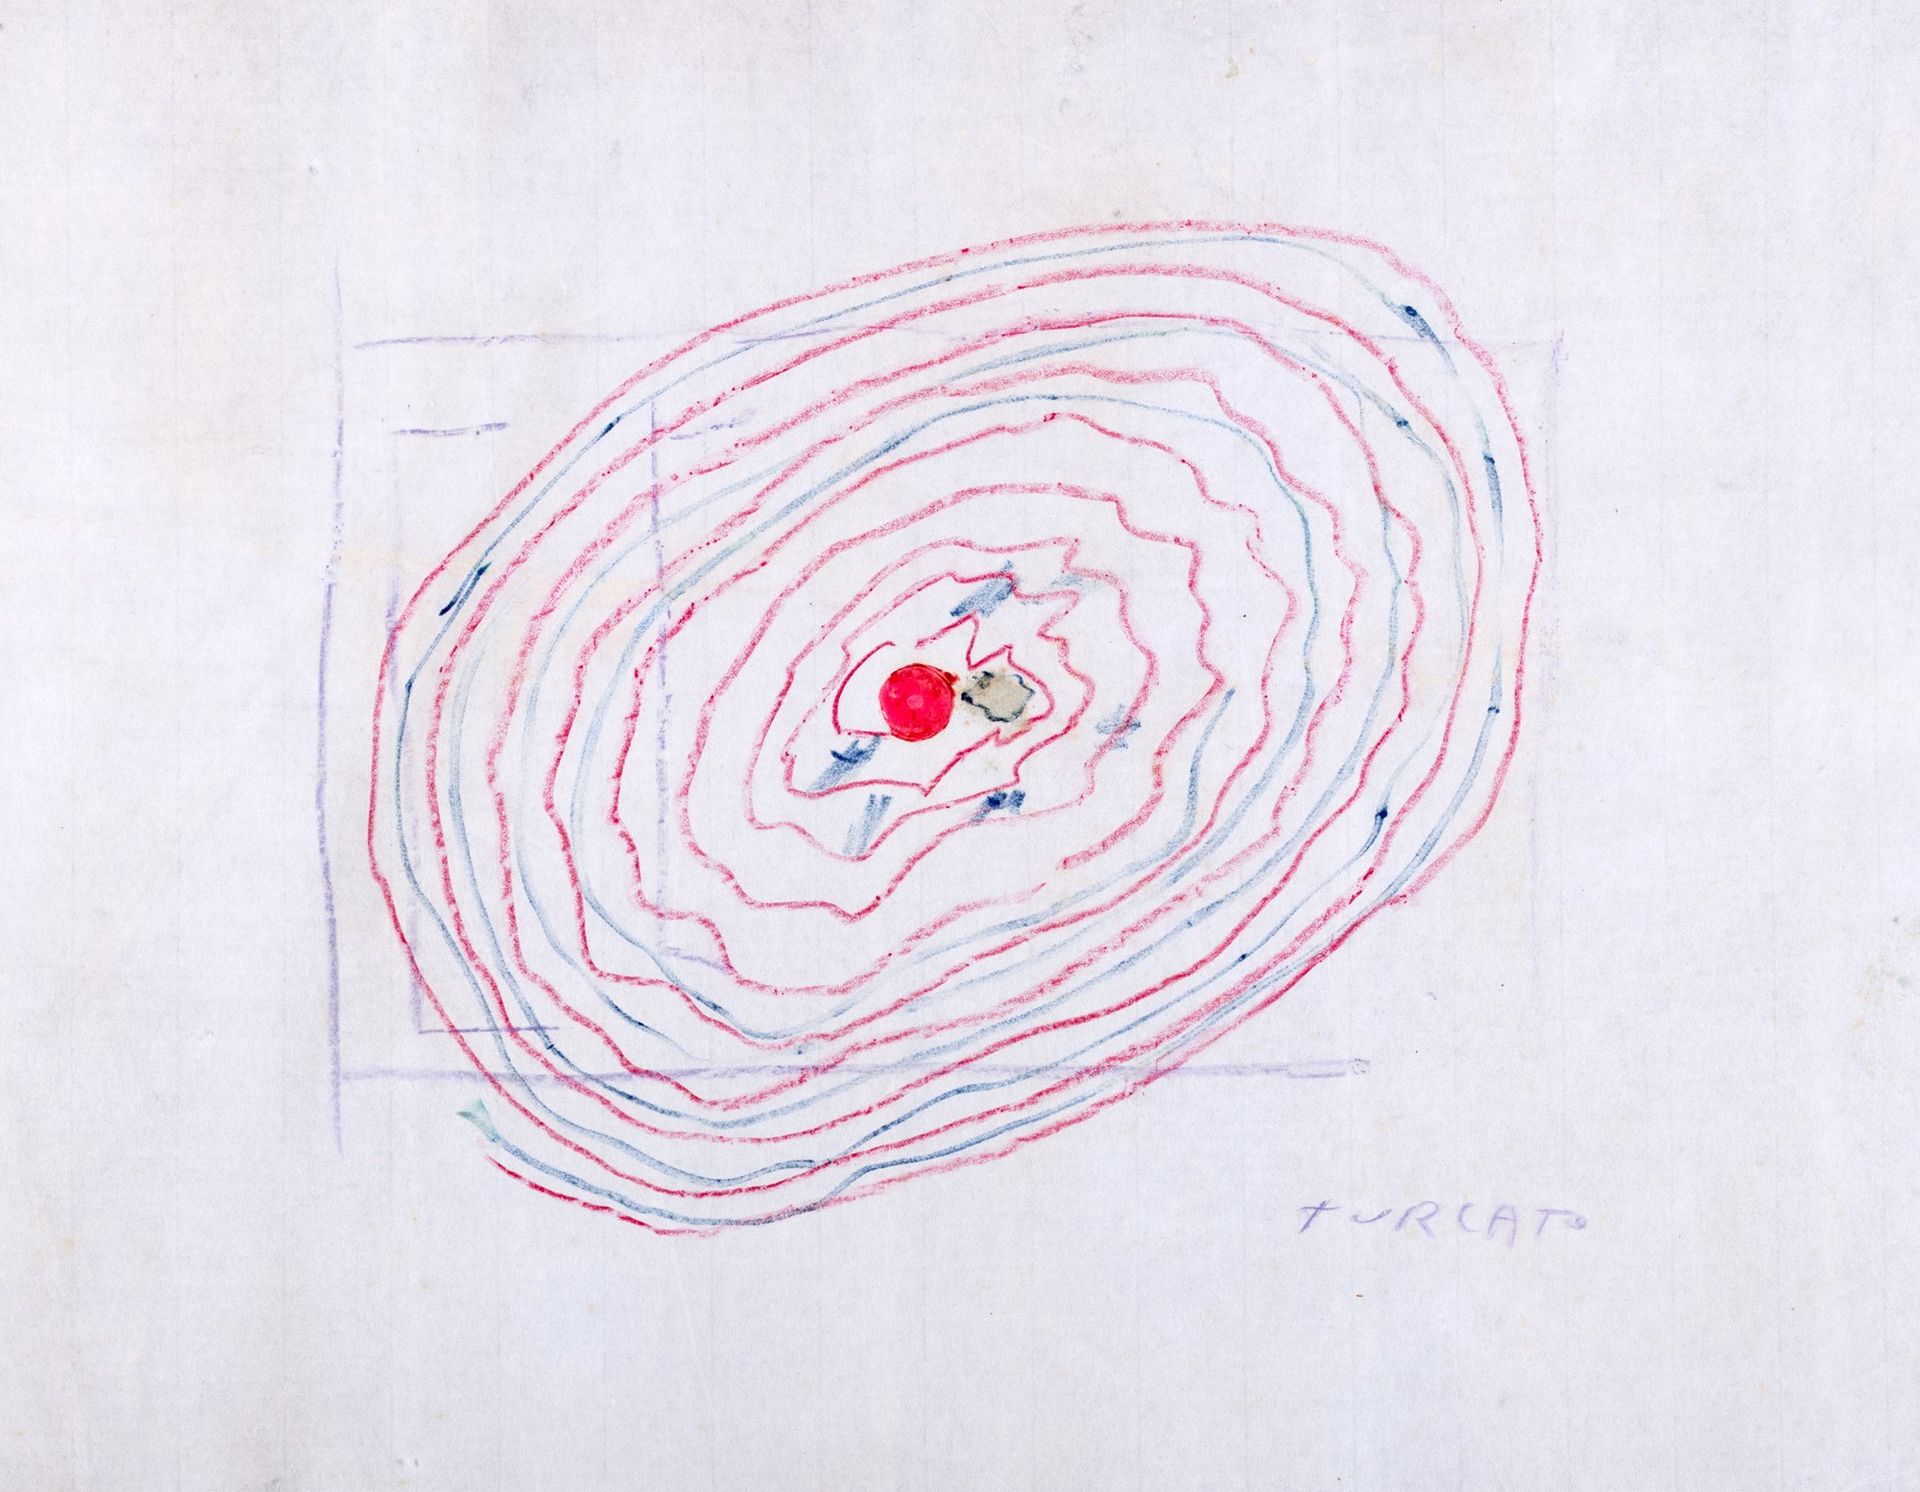 GIULIO TURCATO 宇宙，1970年

钢笔画、粉彩和拼贴纸
49.5 x 64.5 cm
 

右下方有签名：Turcato

背面签名：Giuli&hellip;